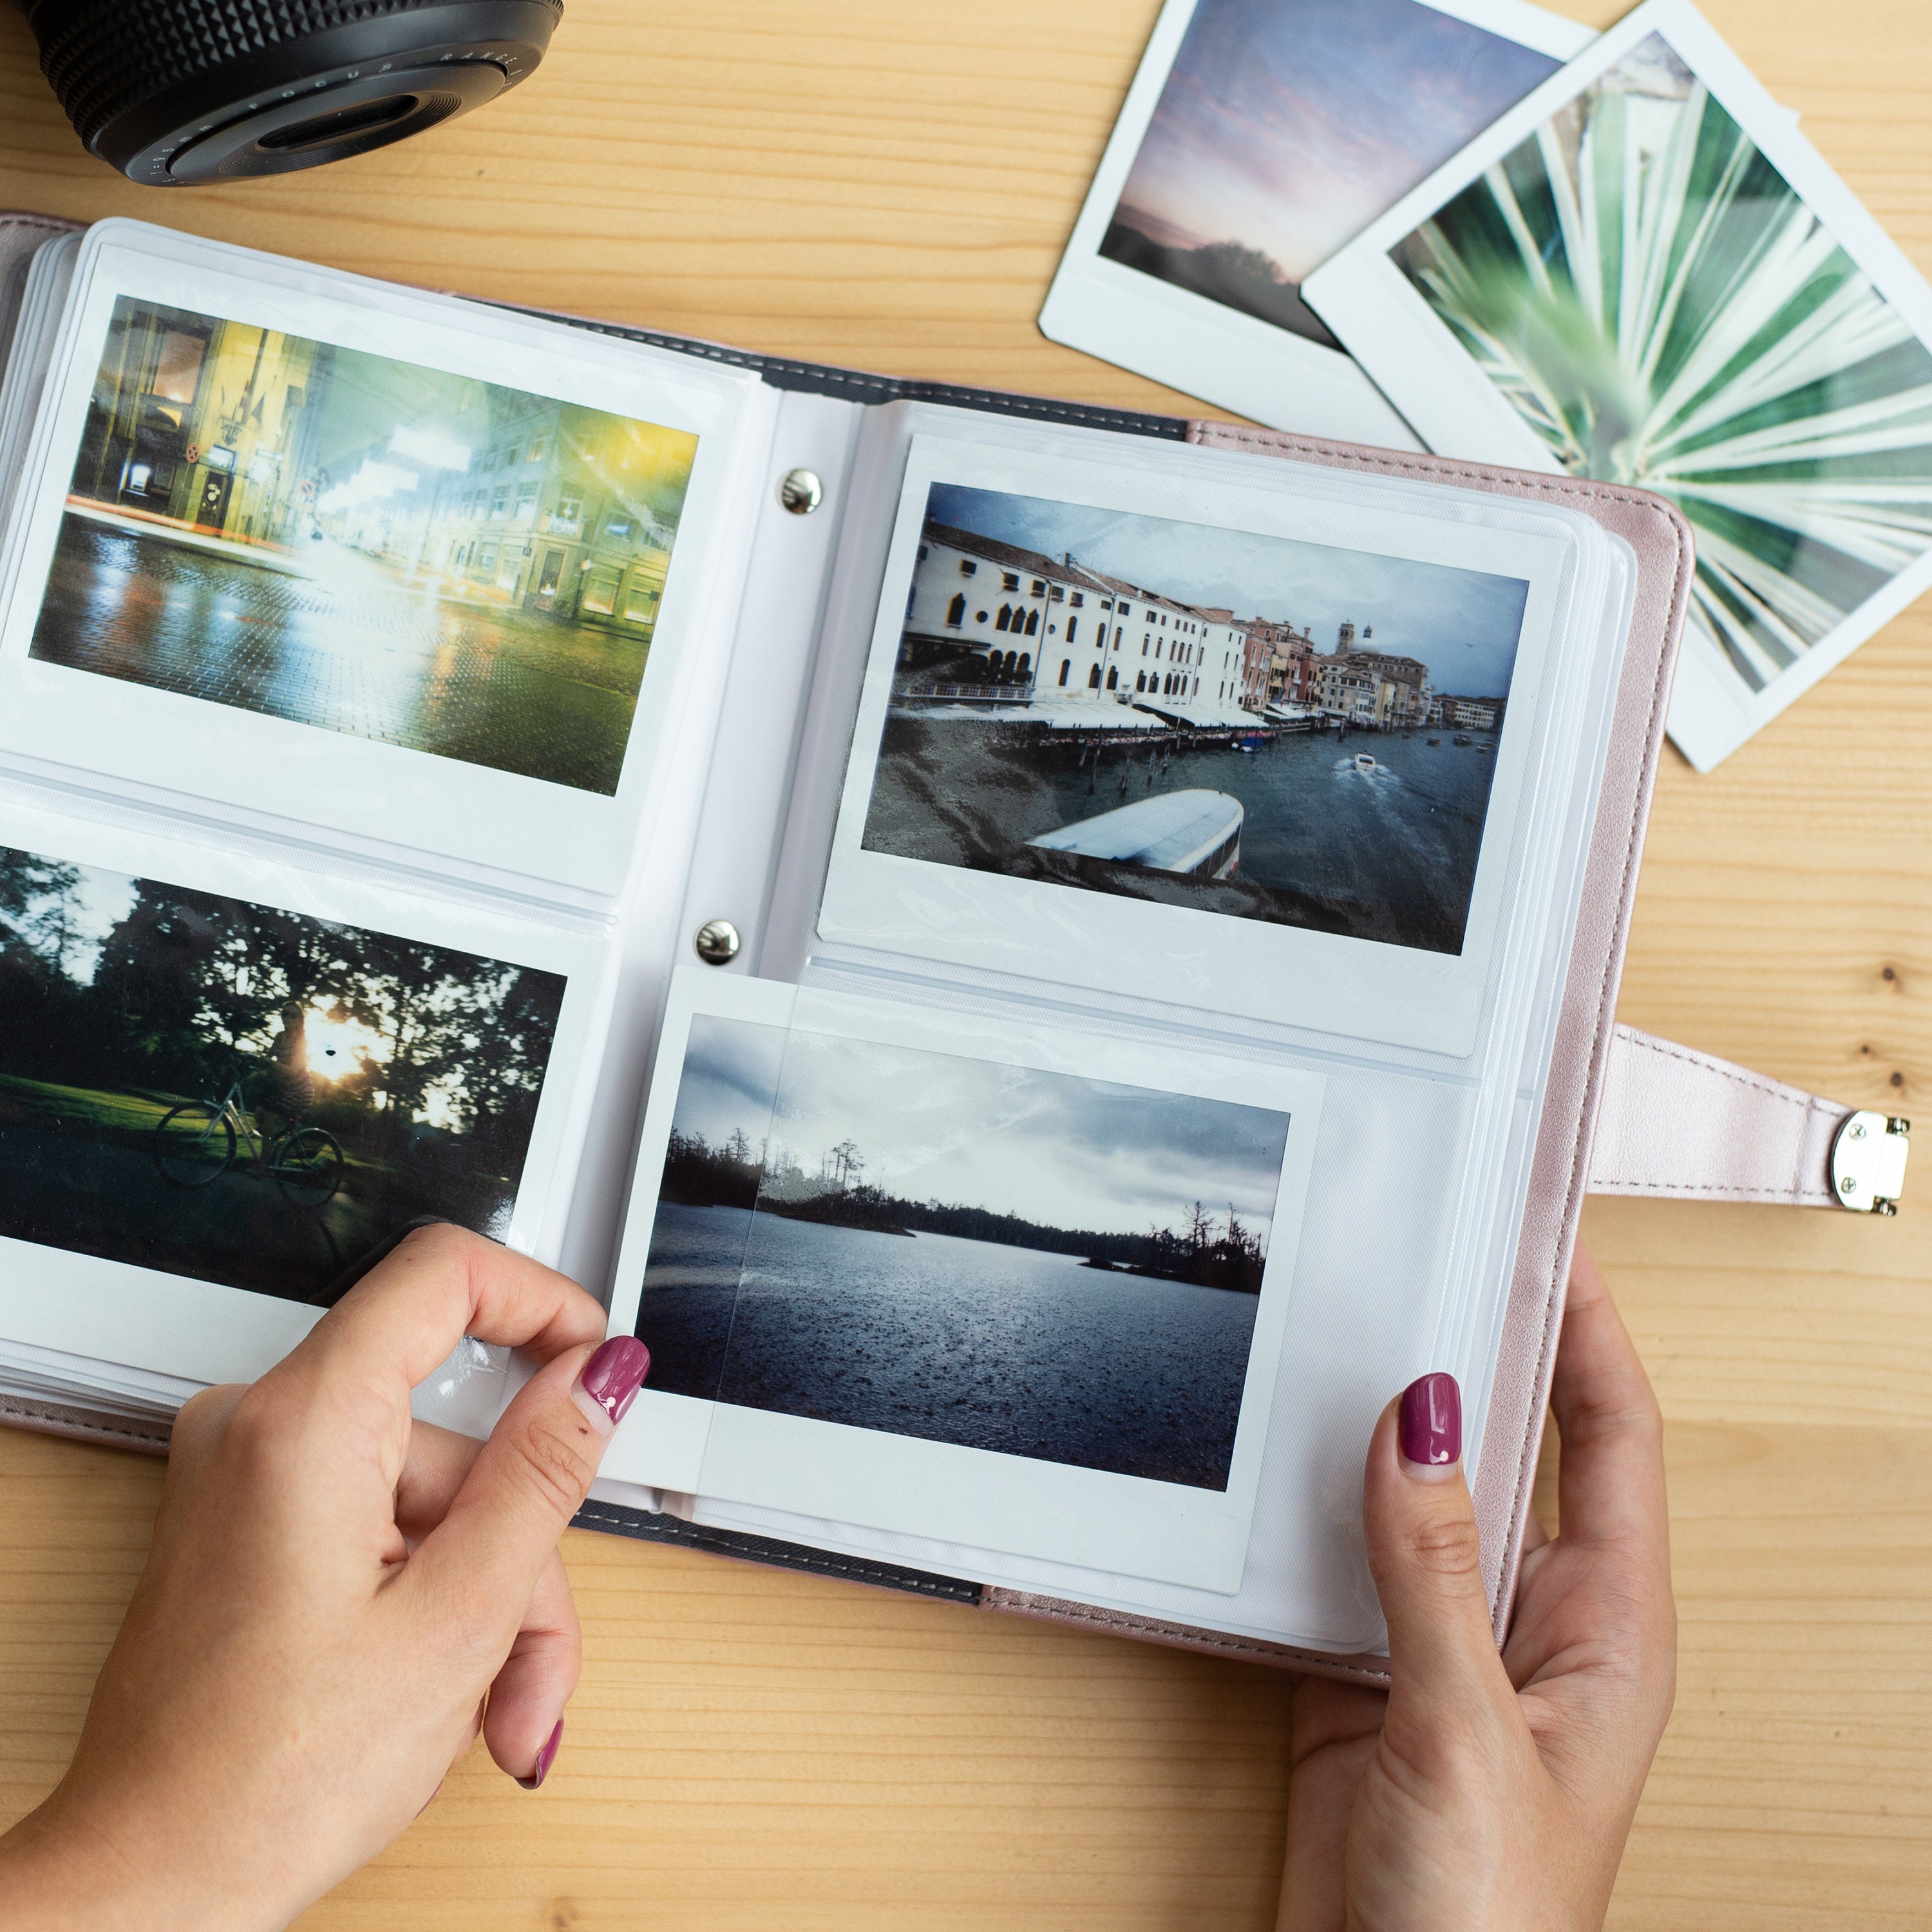 Fintie Photo Album for Fujifilm Instax Wide 300, Polaroid OneStep